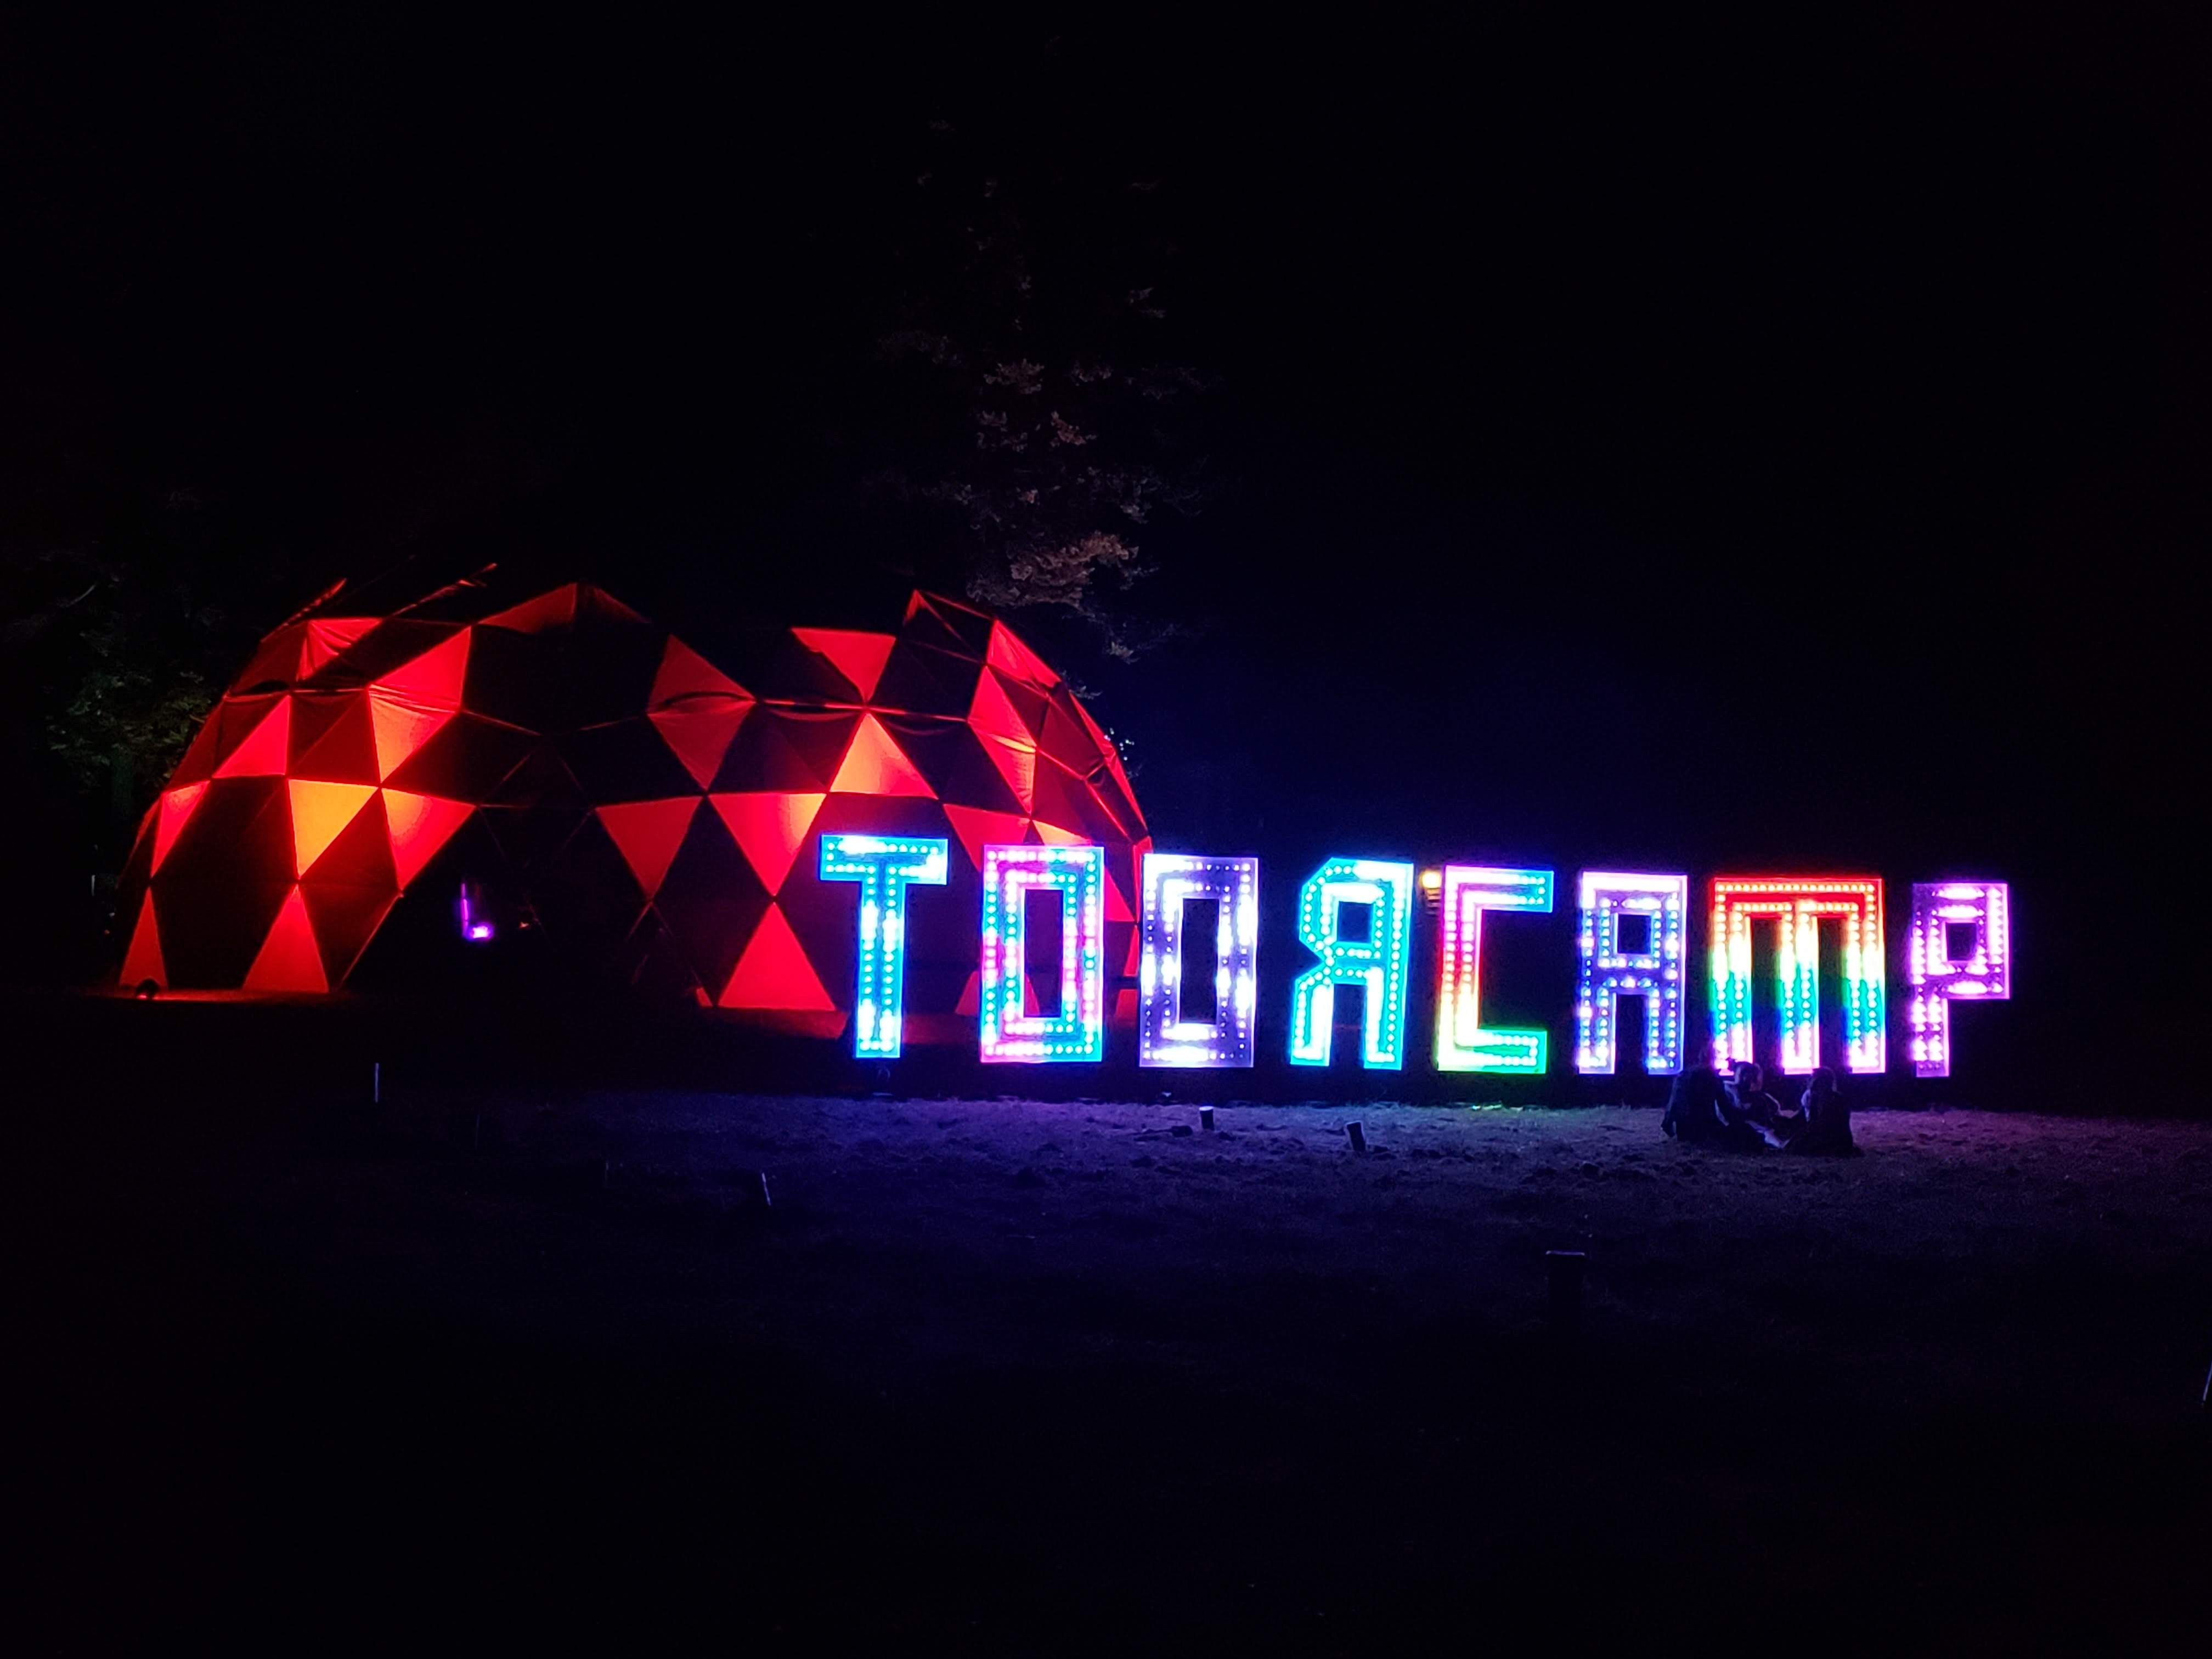 "ToorCamp sign"